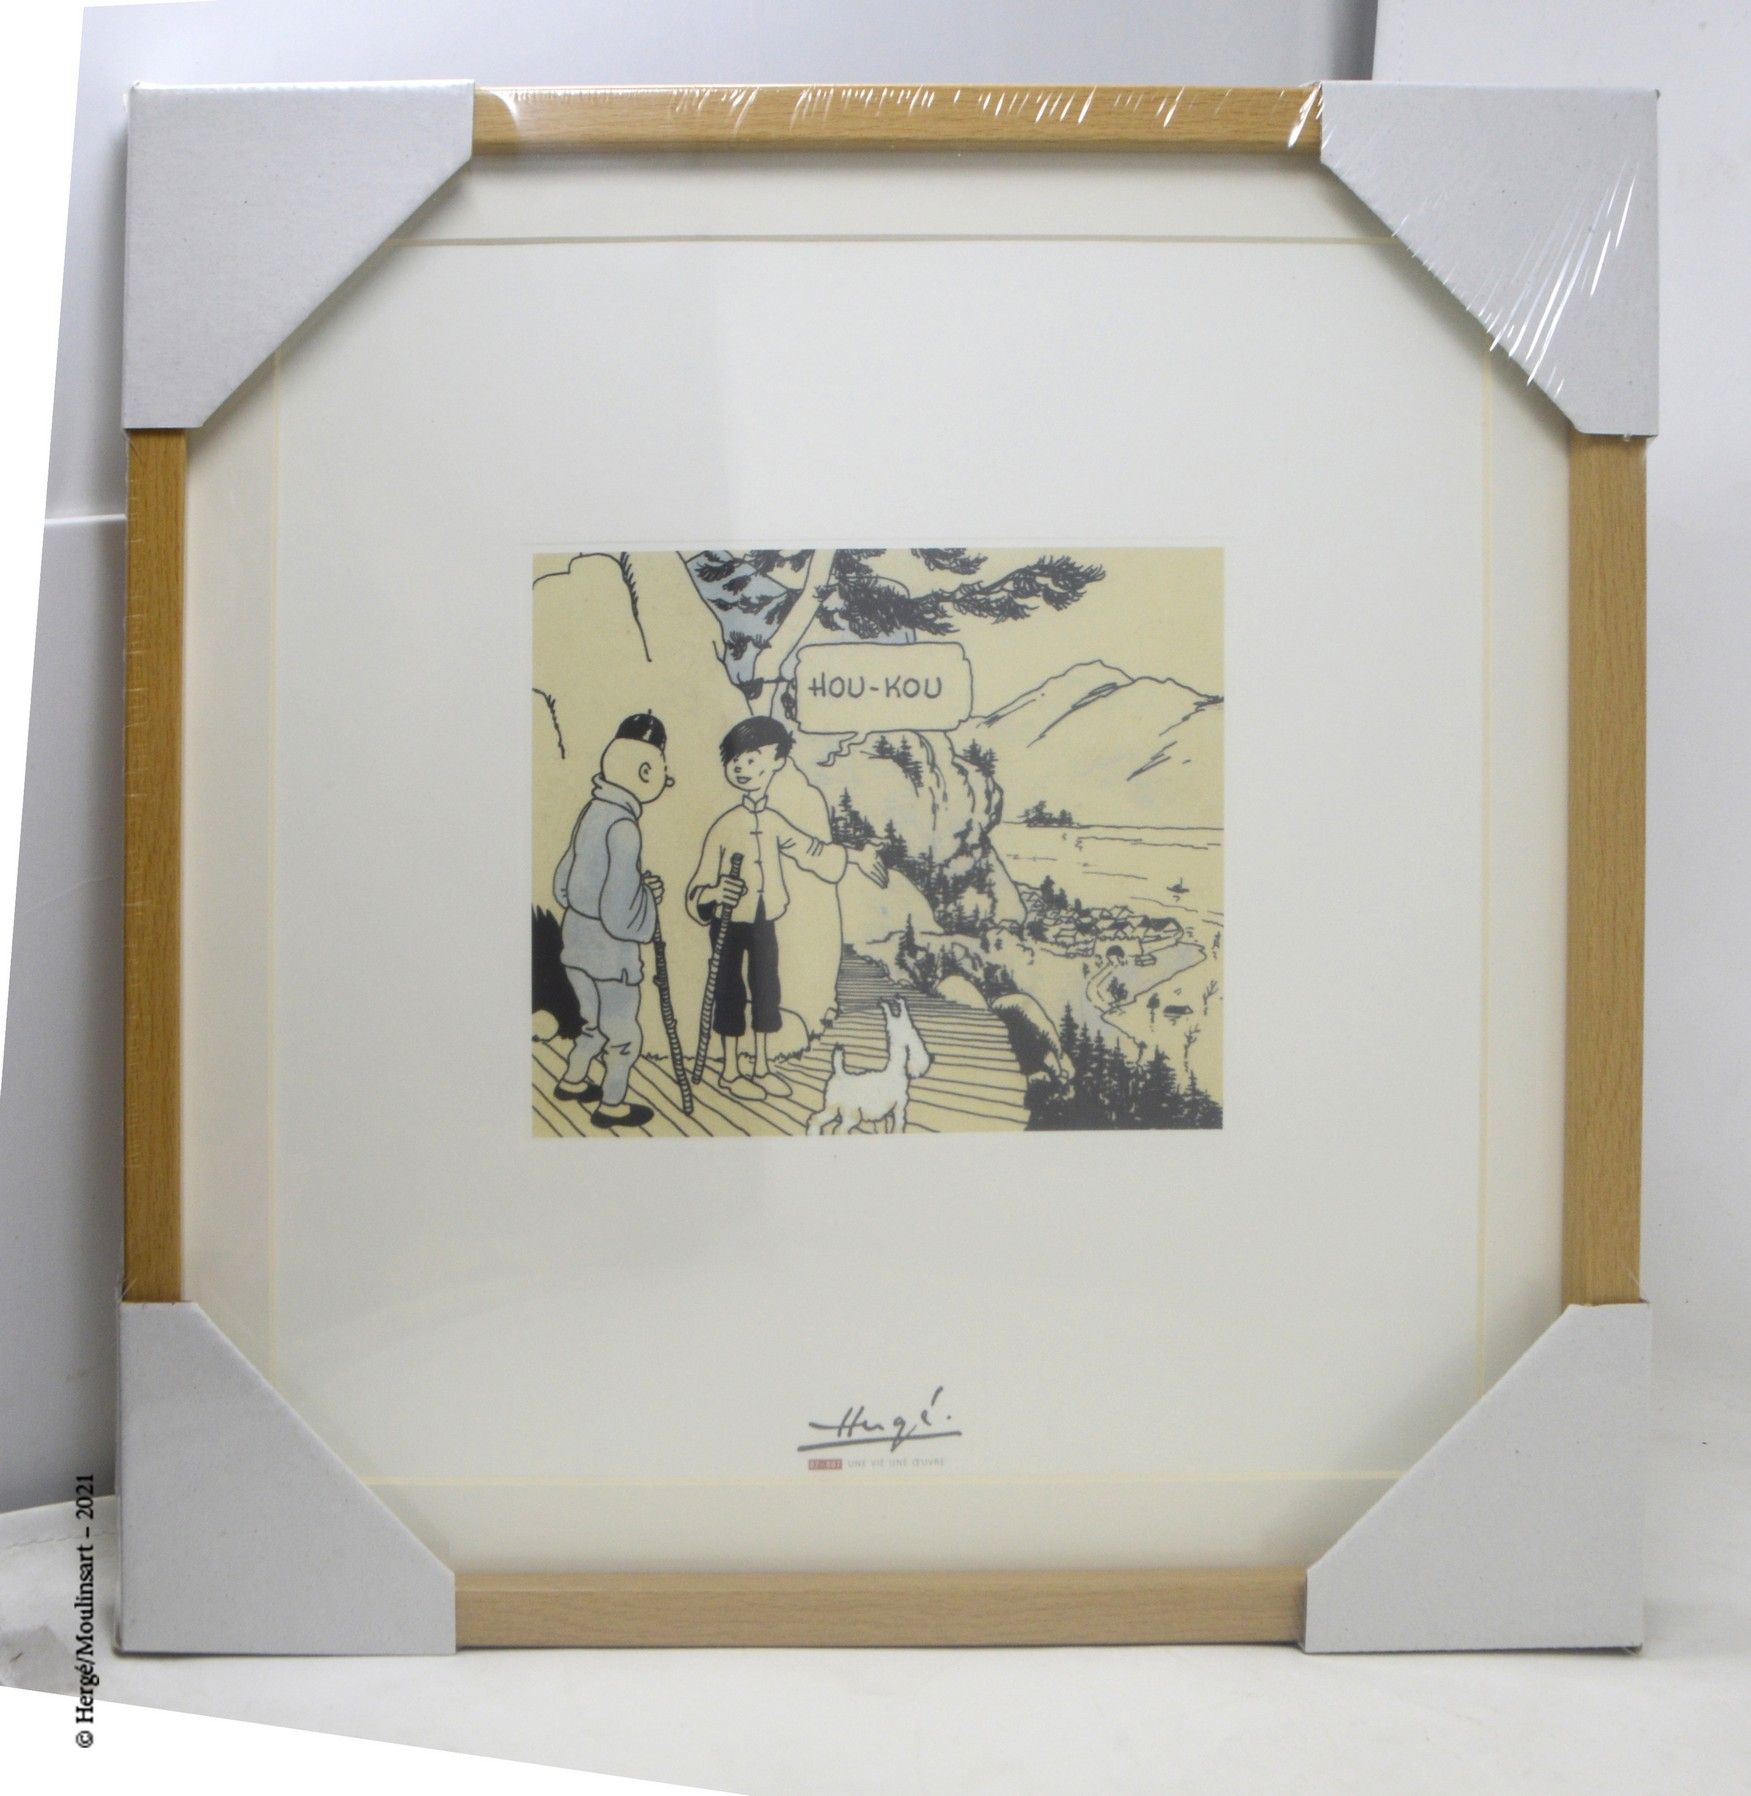 LE LOTUS BLEU Hergé/moulinsart

平版印刷品Moulinsart：Hergé，一个生命，一个作品

蓝莲花

在Hergé诞辰一百&hellip;